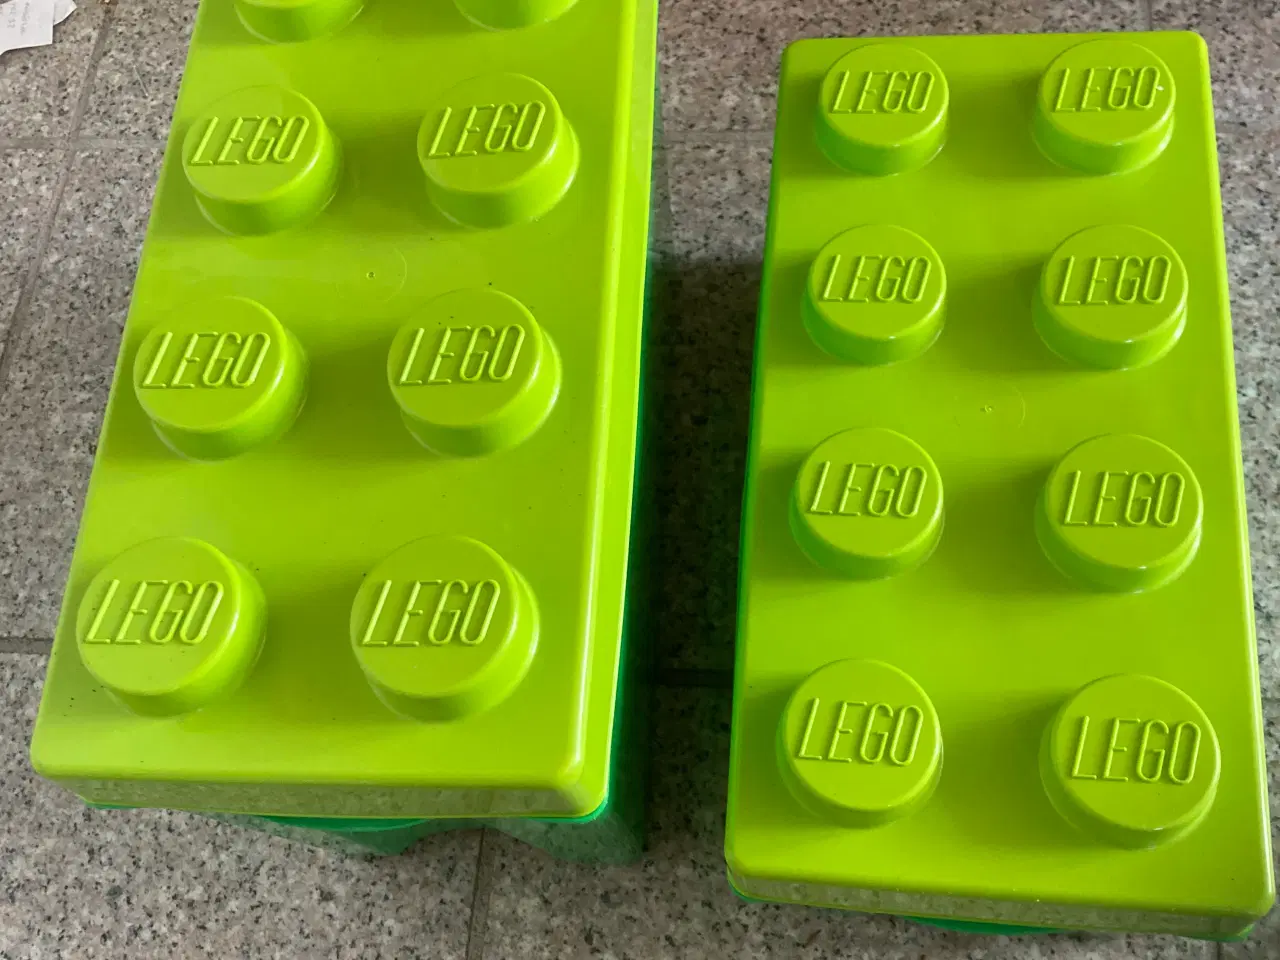 Billede 1 - 2 LEGO kasser inkl. LEGO Duploklodser